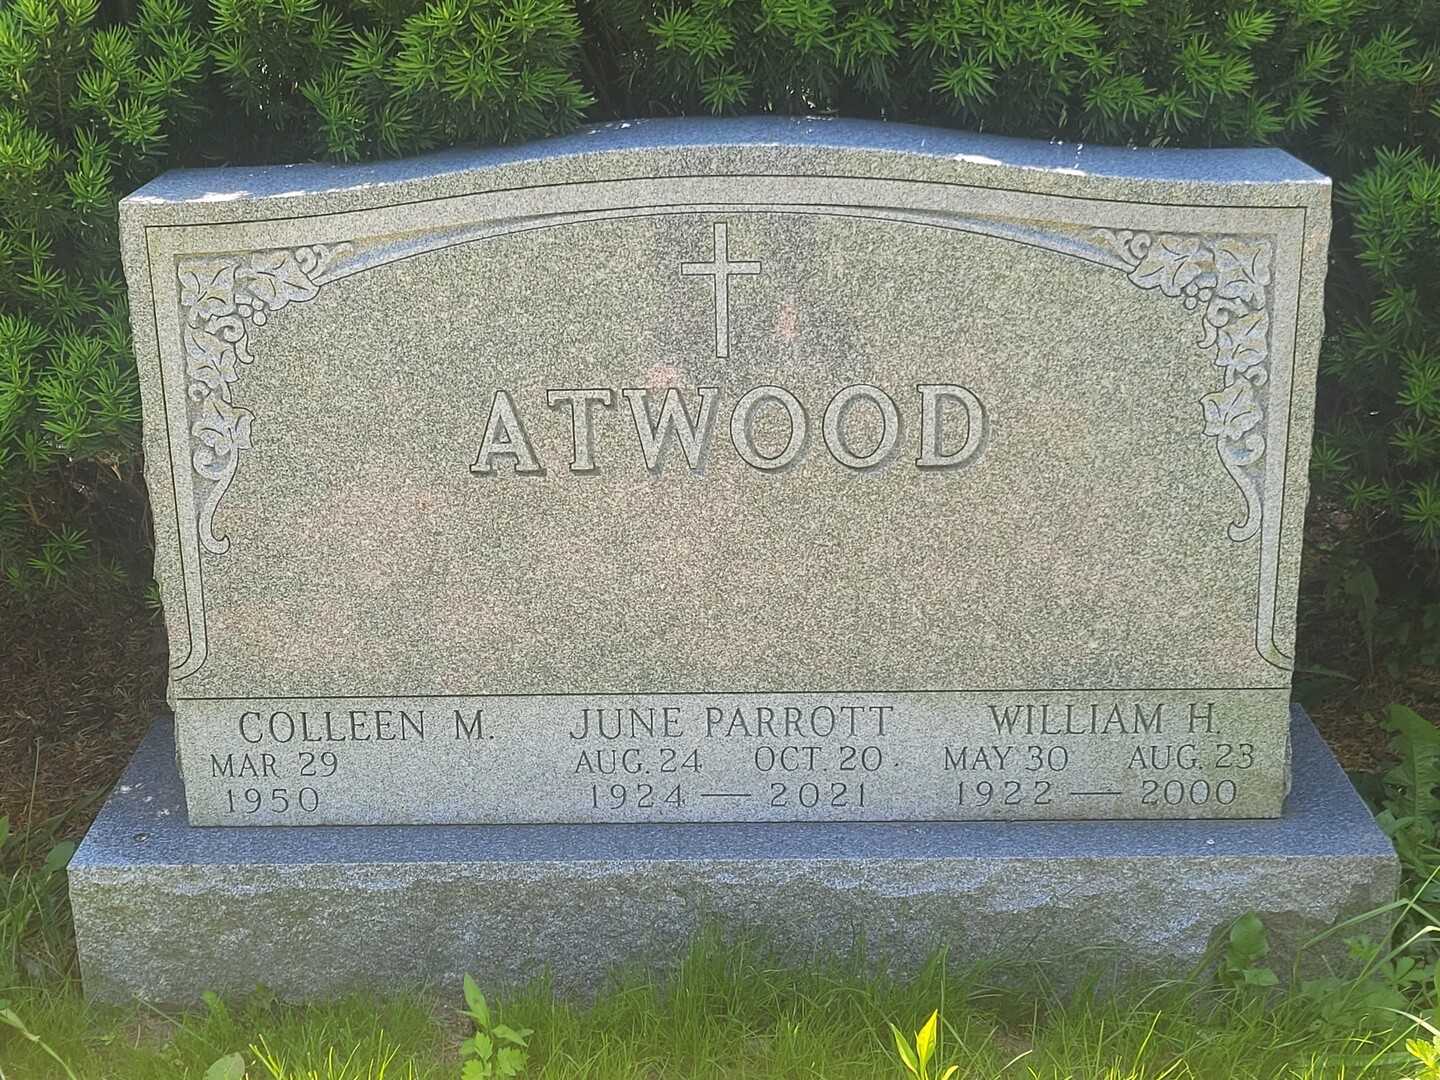 June Alberta Atwood Parrott's grave. Photo 2